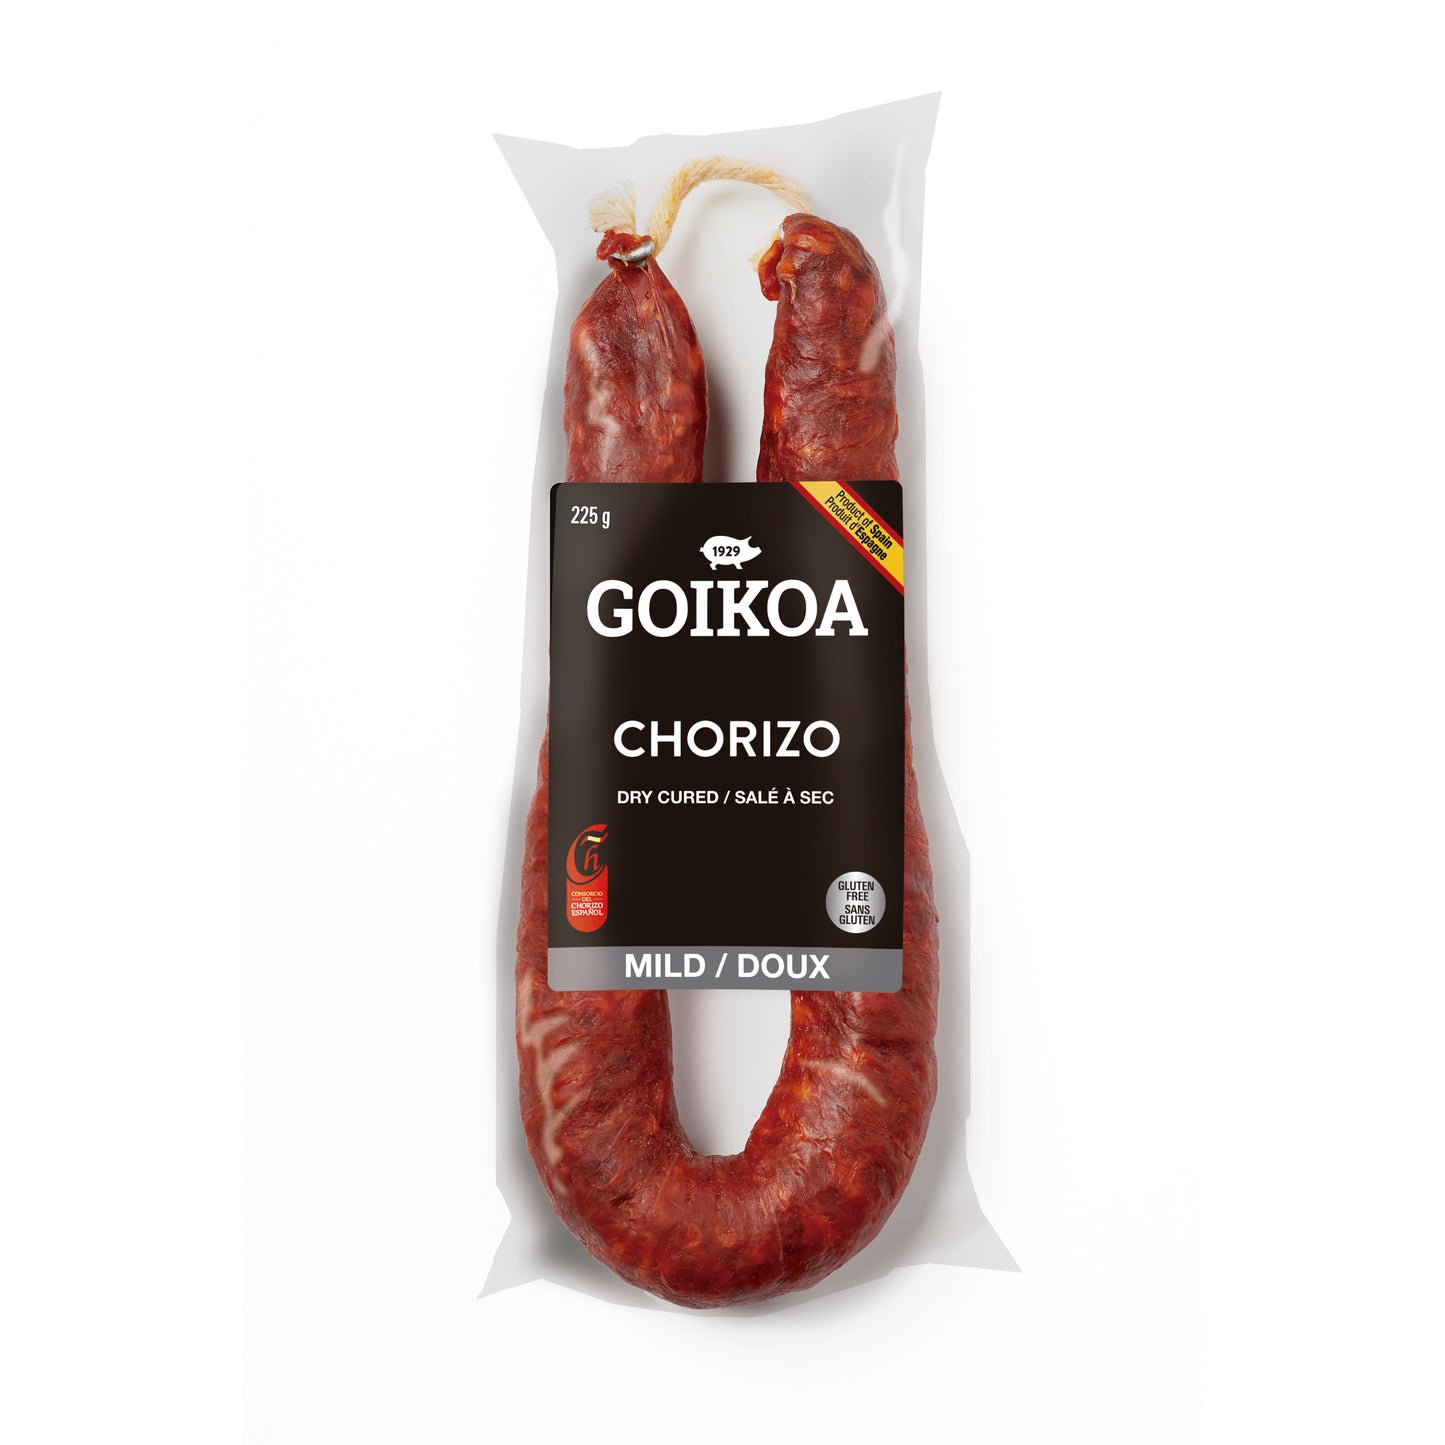 Goikoa Chorizo Sarta Mild 225g | Spanish Imports Online Toronto Ontario  | The Spanish Store